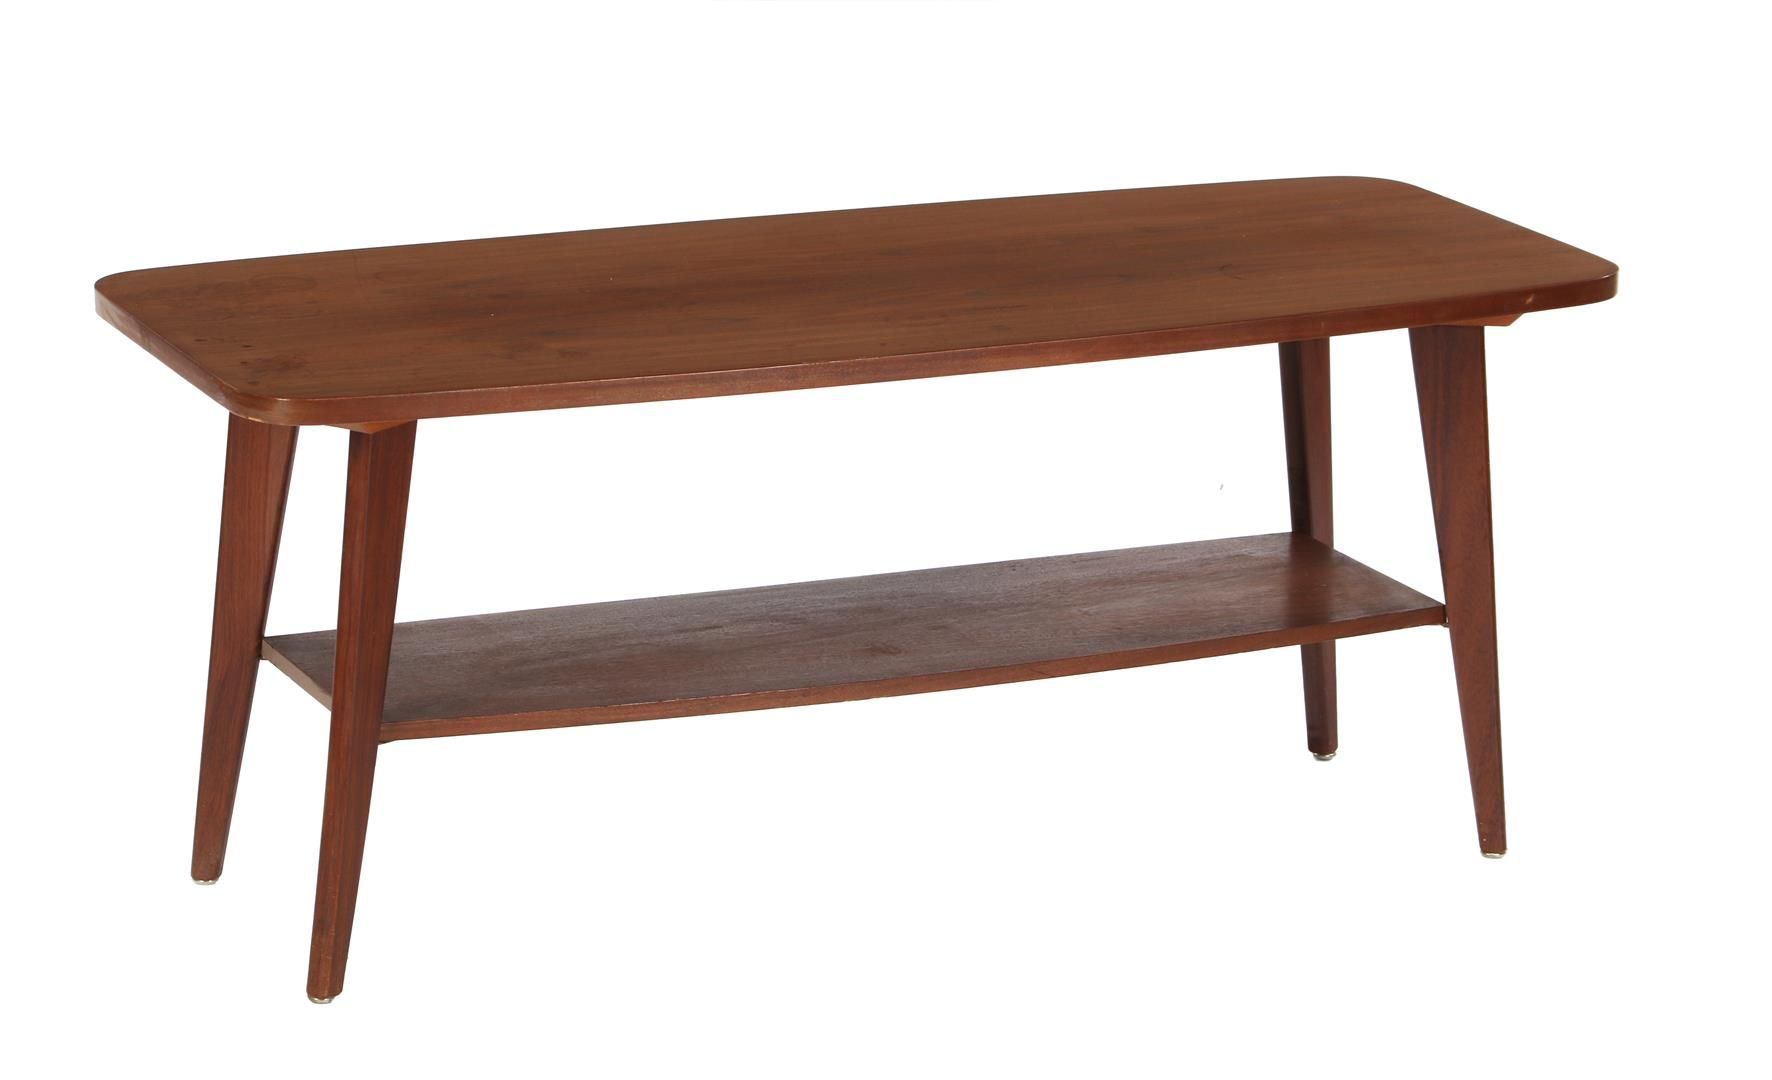 Coffee table Teak veneer 1960s coffee table with shelf, 47 cm high, 110x48 cm